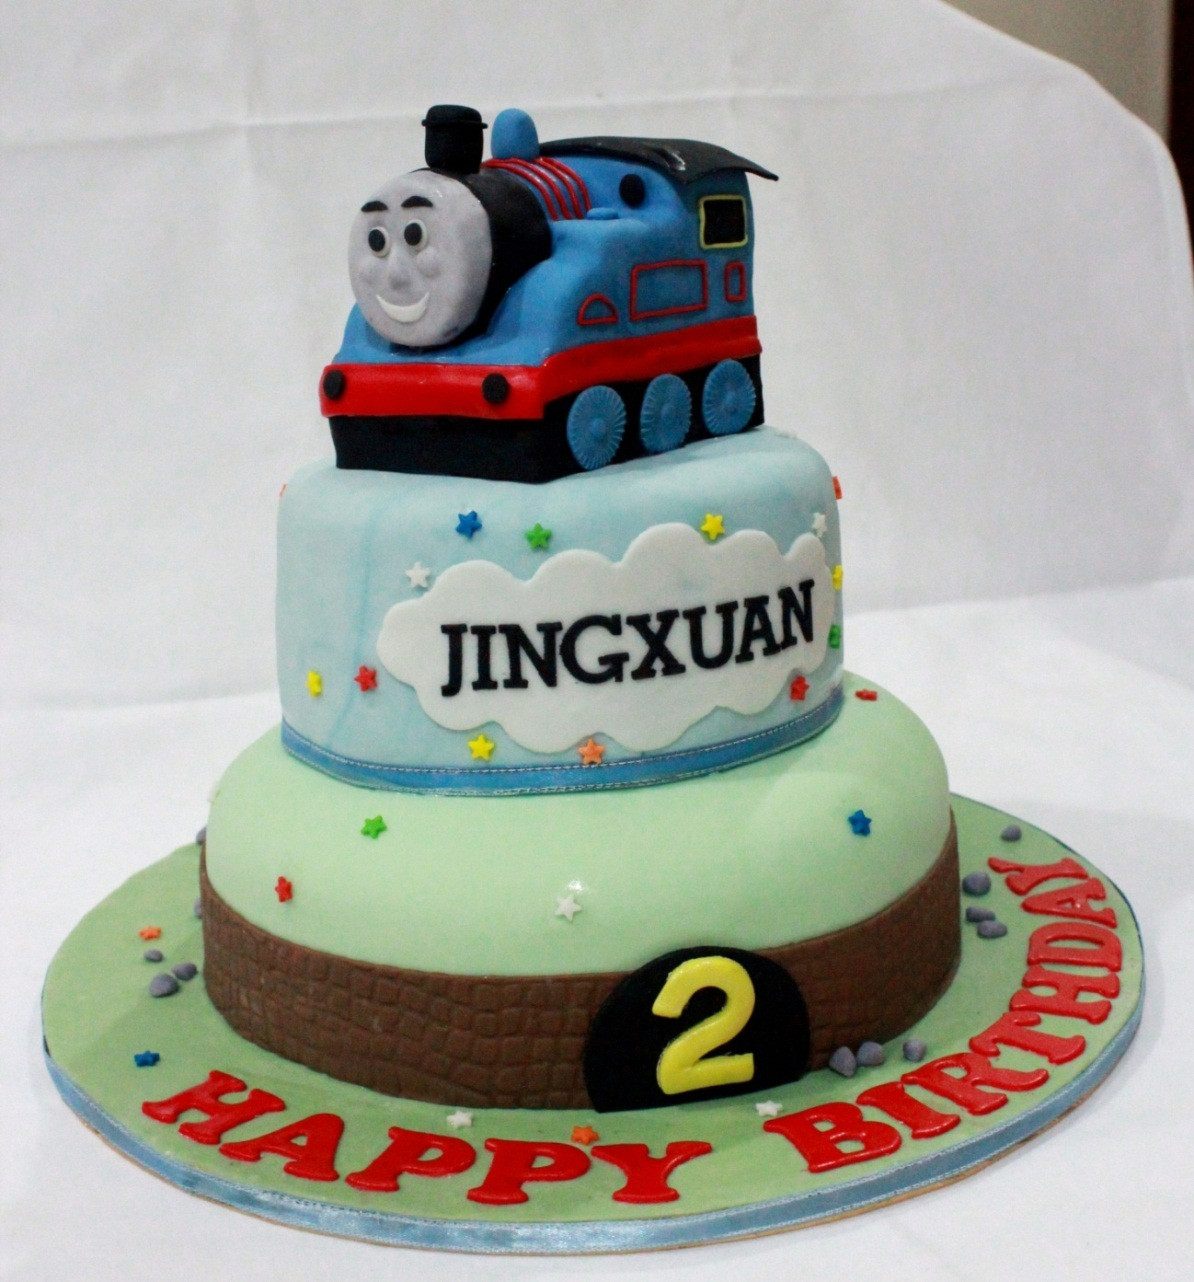 Best ideas about Thomas Birthday Cake
. Save or Pin Bearylicious Cakes Thomas the Train birthday cake Now.